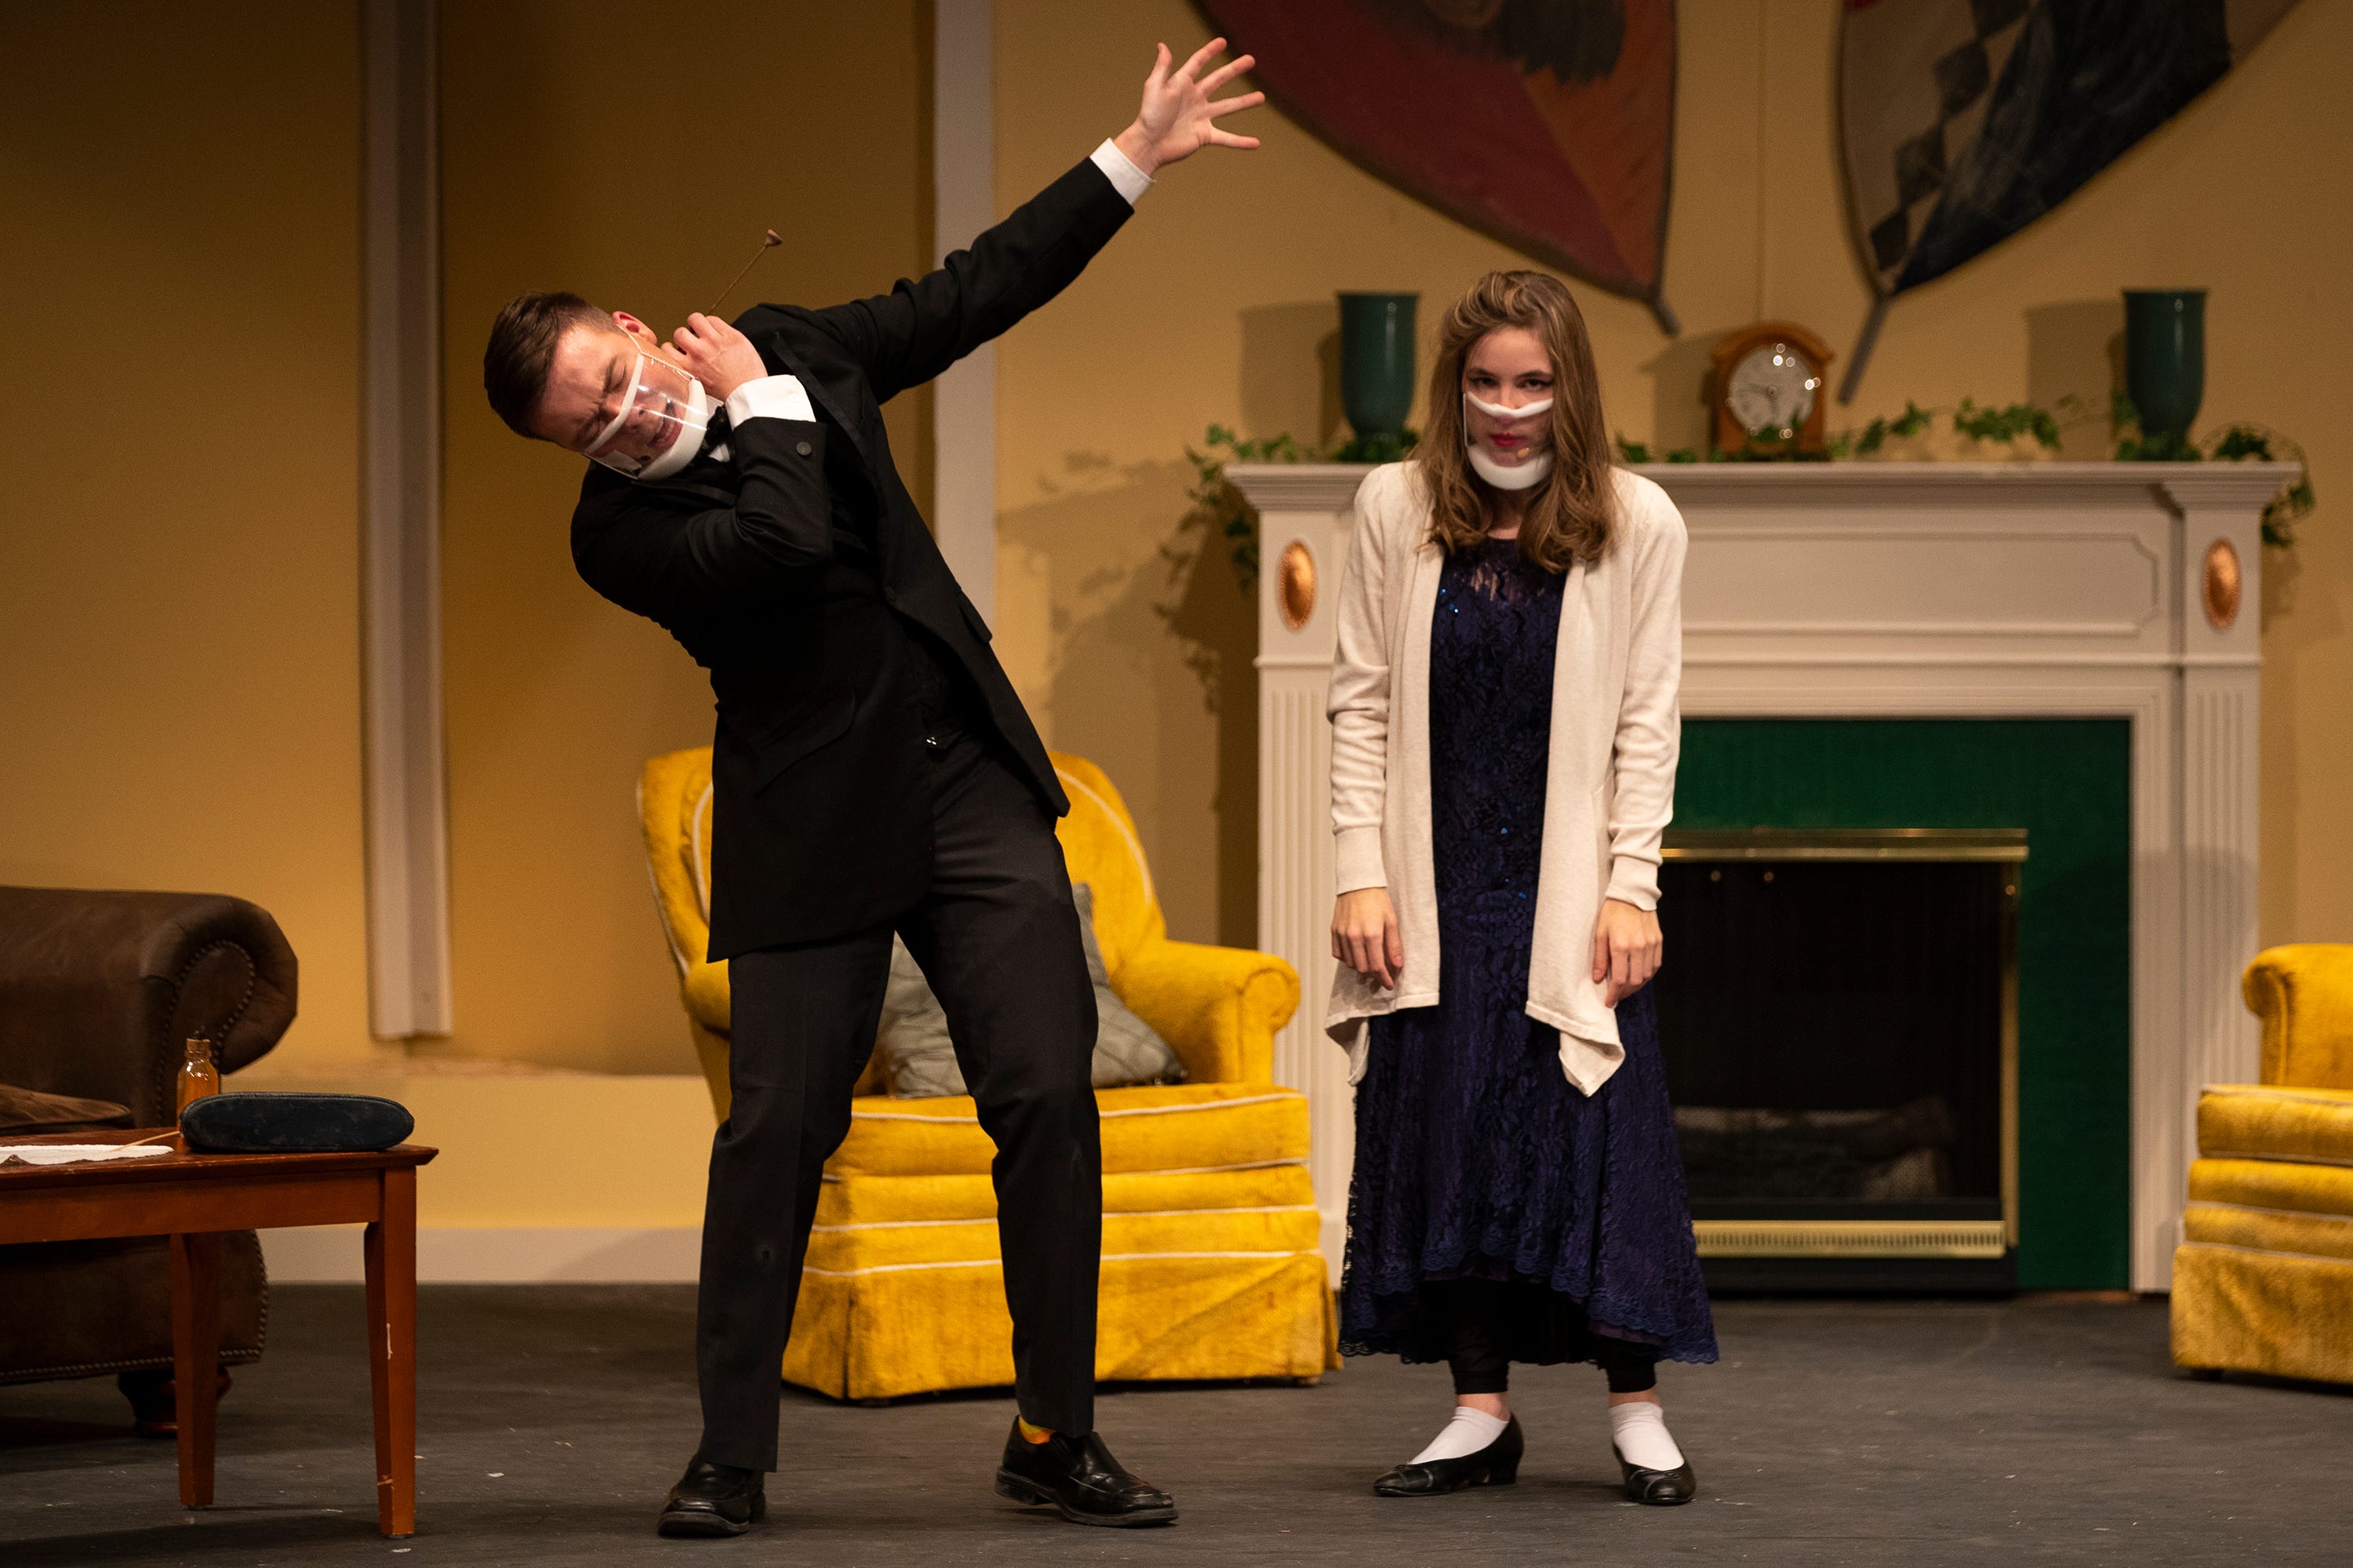 Ryan Rasmussen and Josie Parent rehearse the play "Murder at Rundown Abbey" at Wausau West High School on Tuesday in Wausau.